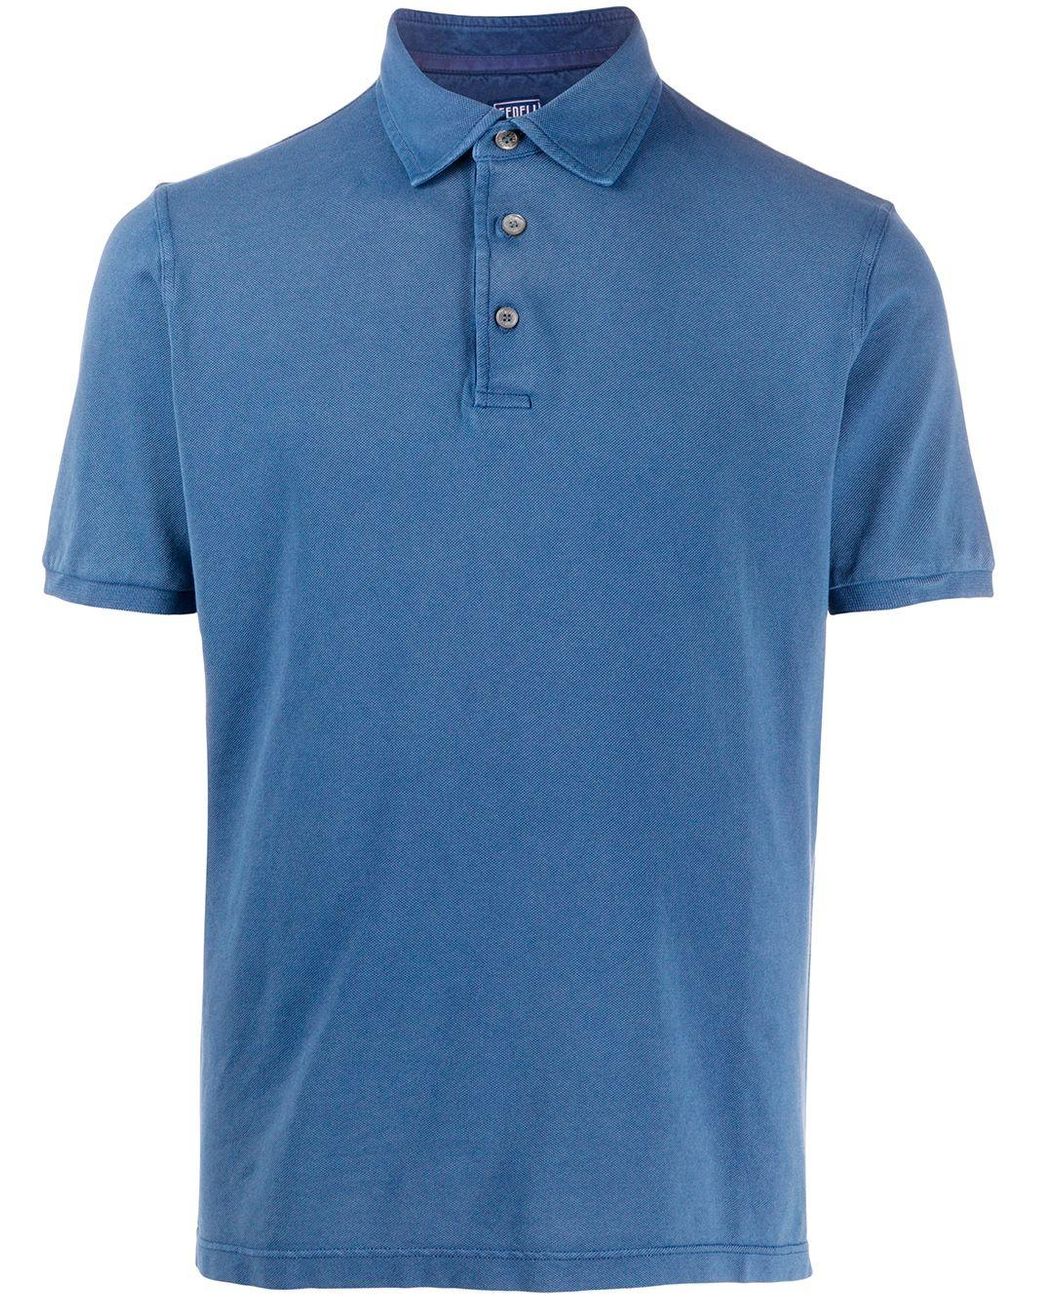 Fedeli Cotton Plain Polo Shirt in Blue for Men - Lyst